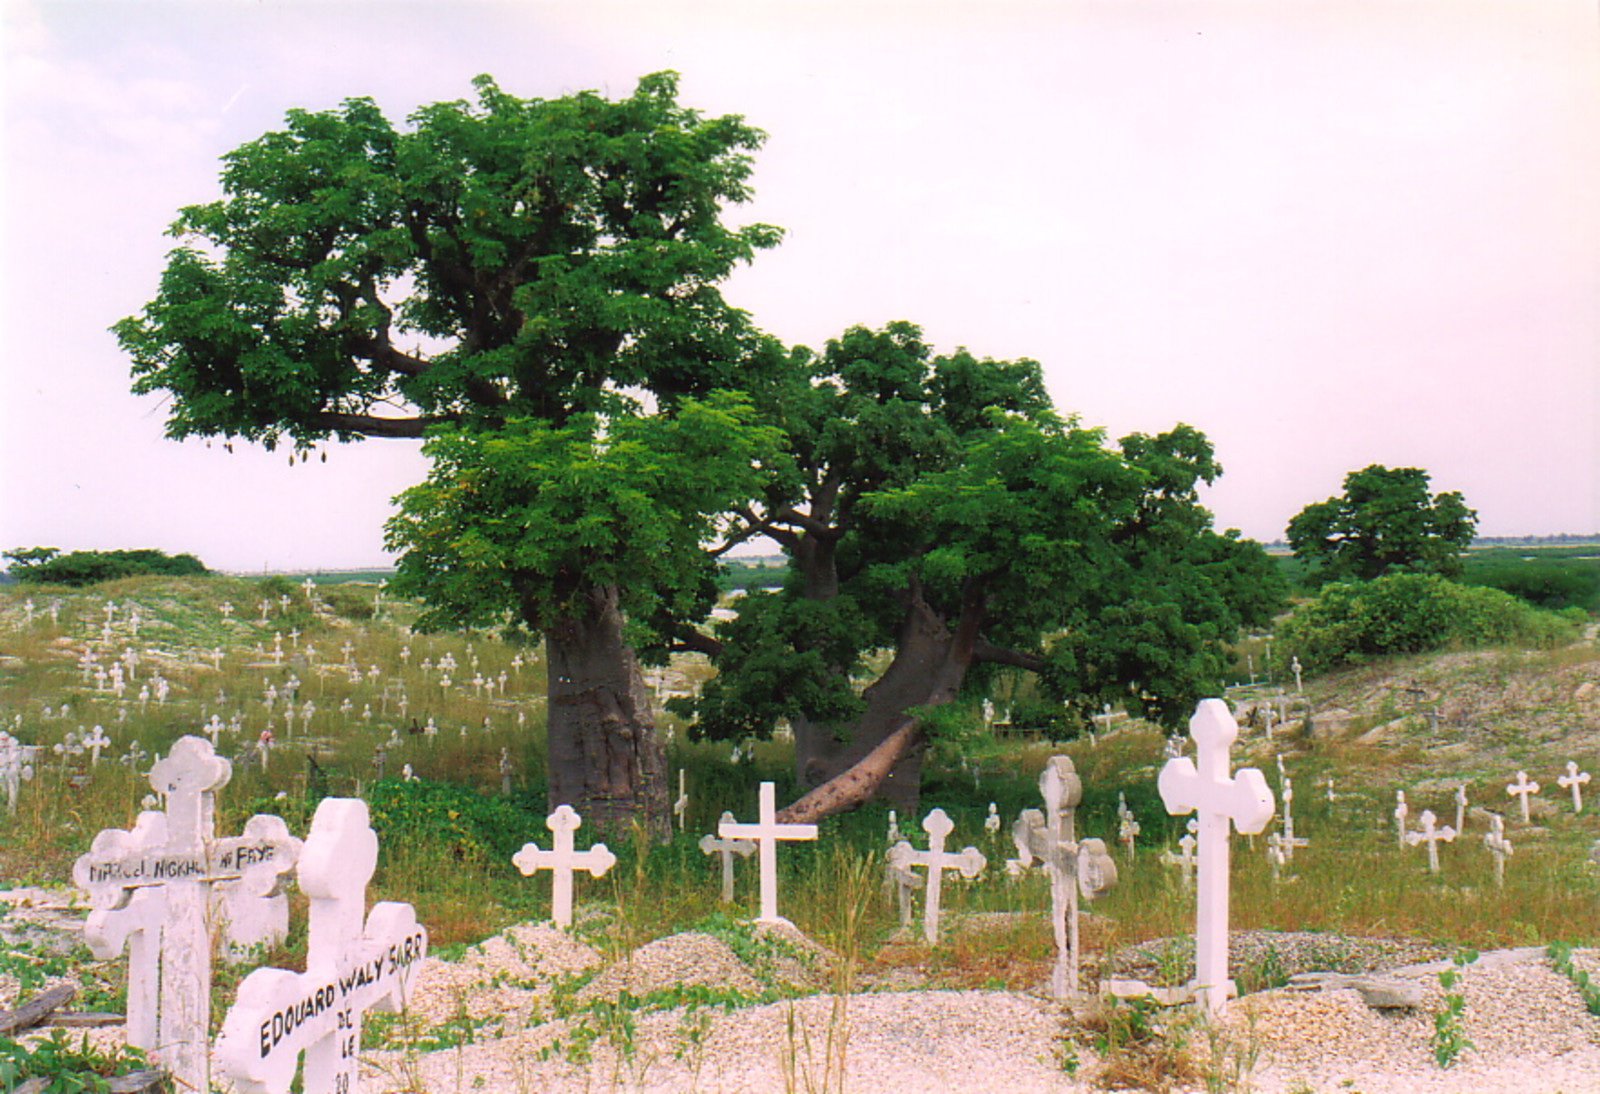 A Christian graveyard on Fadiout island